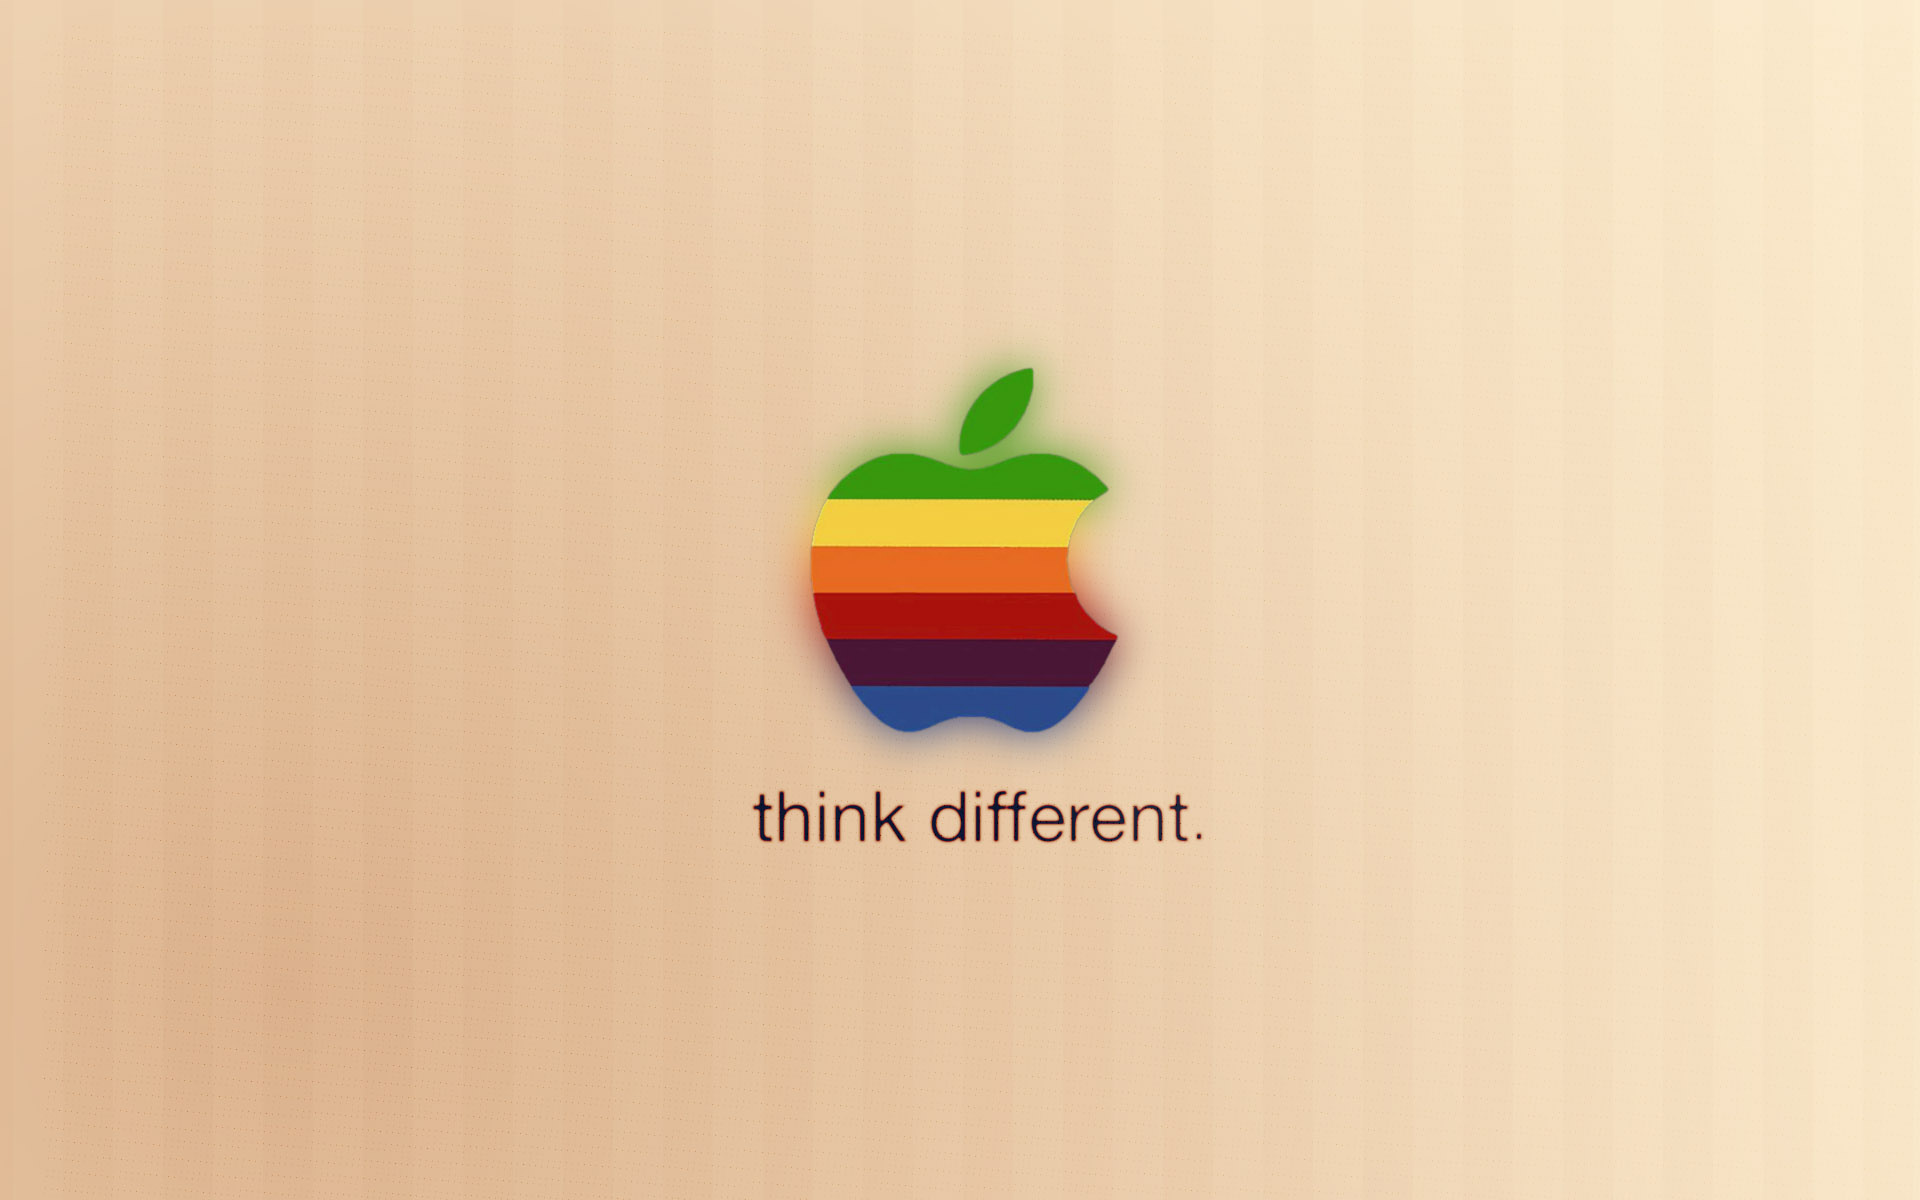 Apple desktop wallpaper high resolution